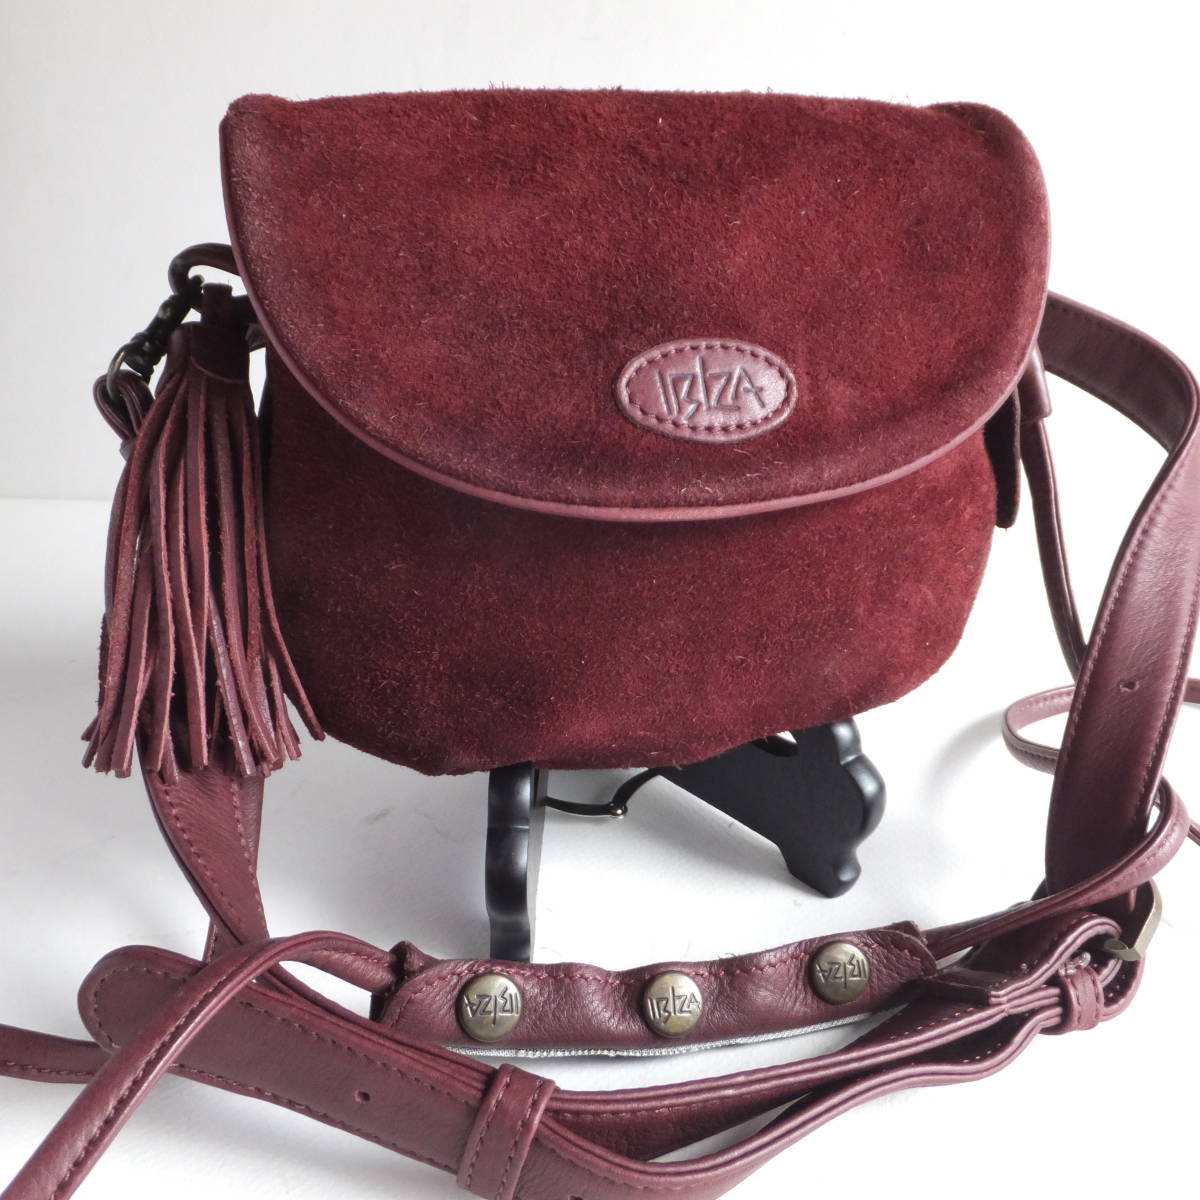 IBIZAibi The original leather suede leather 2way belt bag shoulder bag bordeaux 